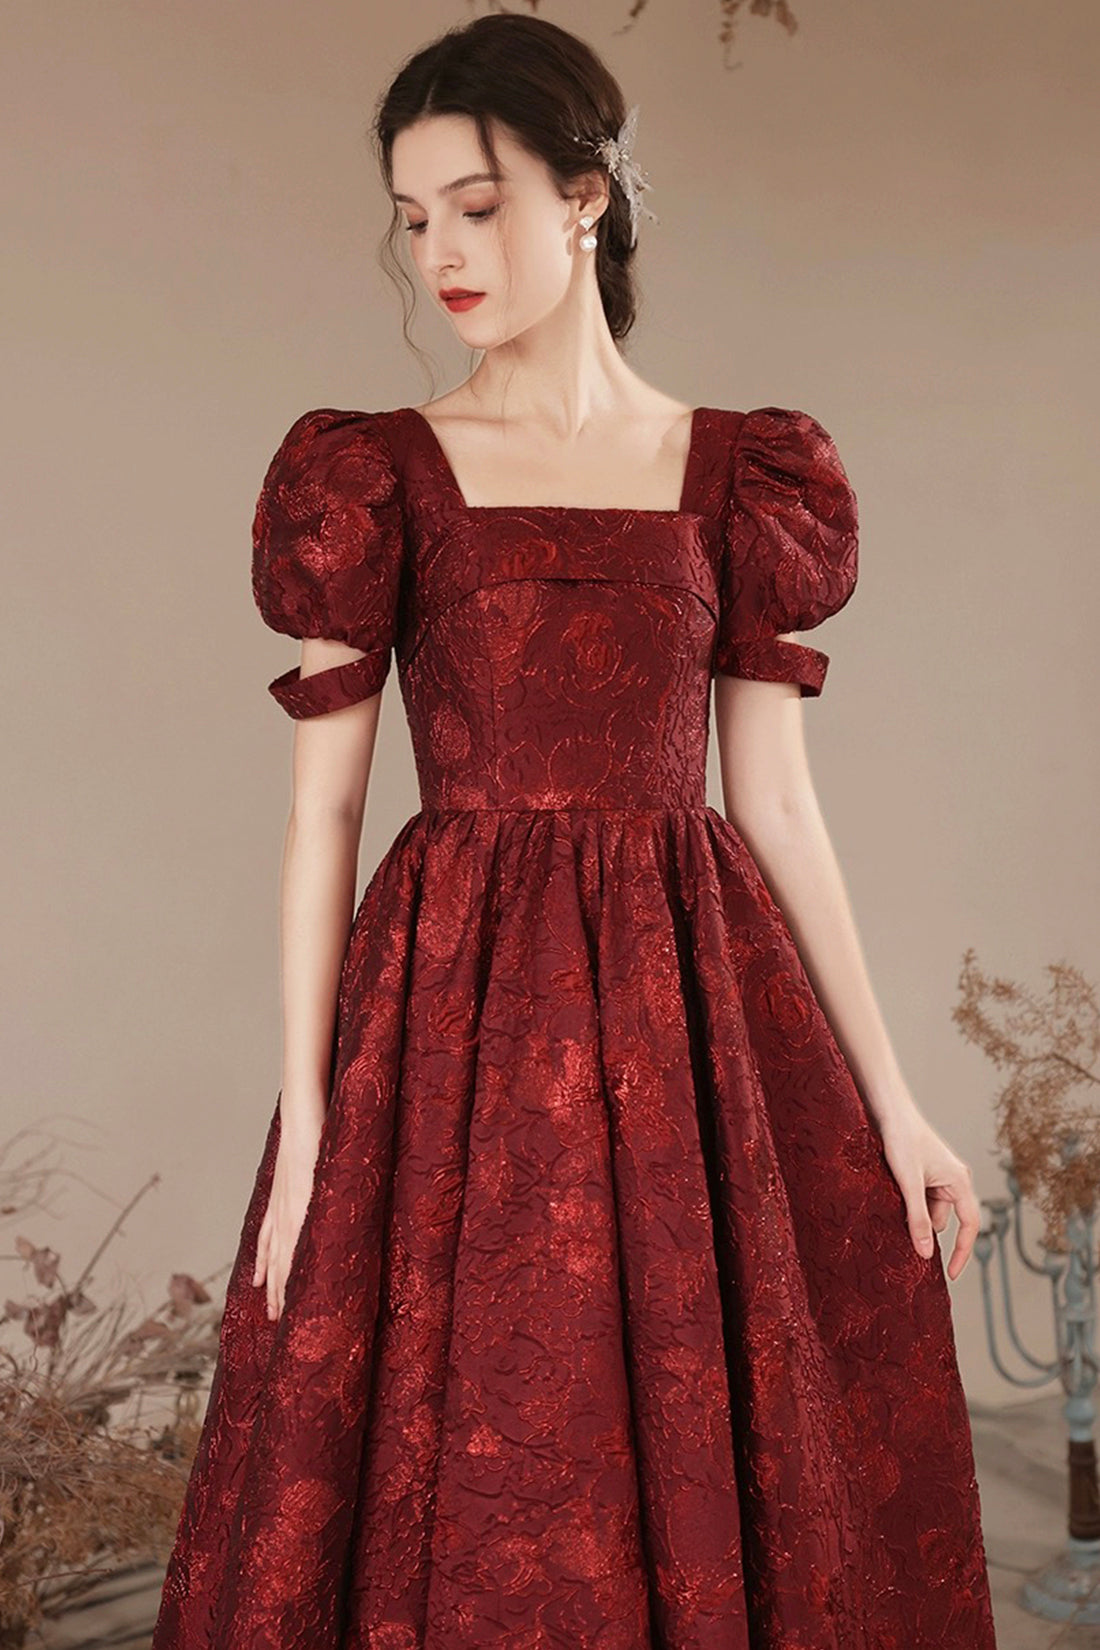 Burgundy Short Sleeve Tea Length Prom Dress, Lovely A-Line Evening Party Dress